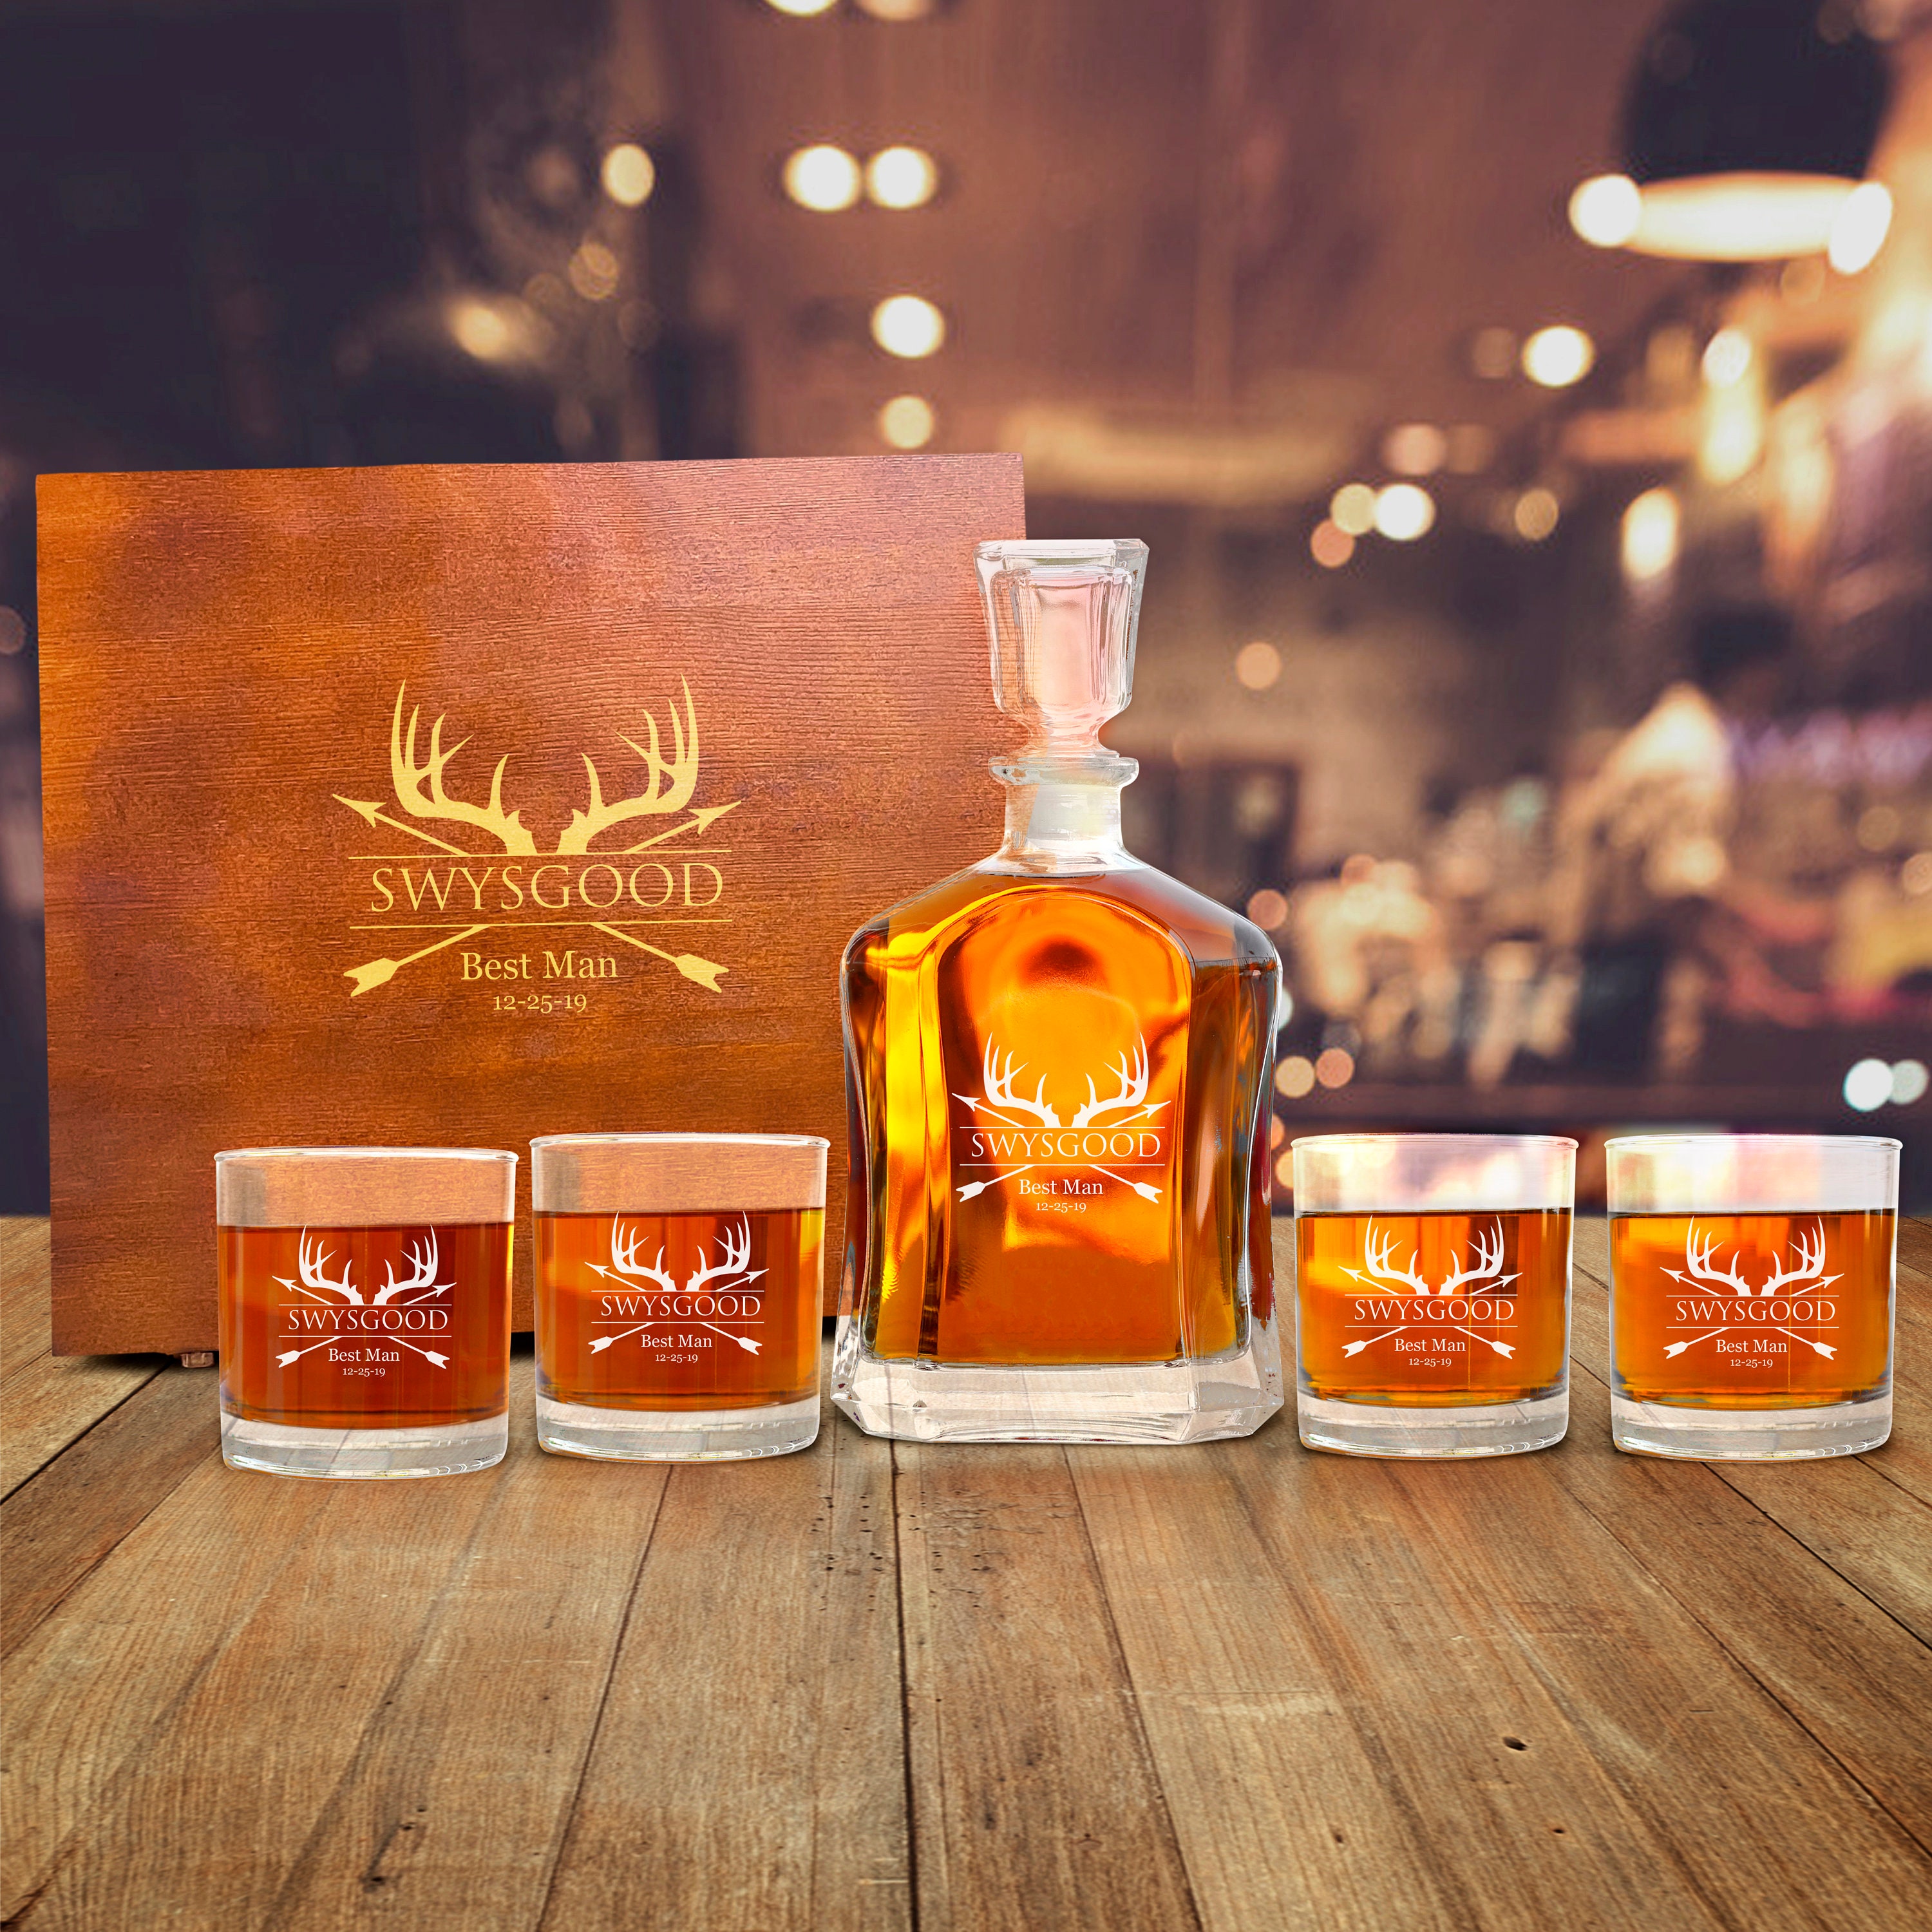 Personalized Antler Whiskey Decanter Set | Hunter Whiskey Set Gift |  Outdoorsman Gift